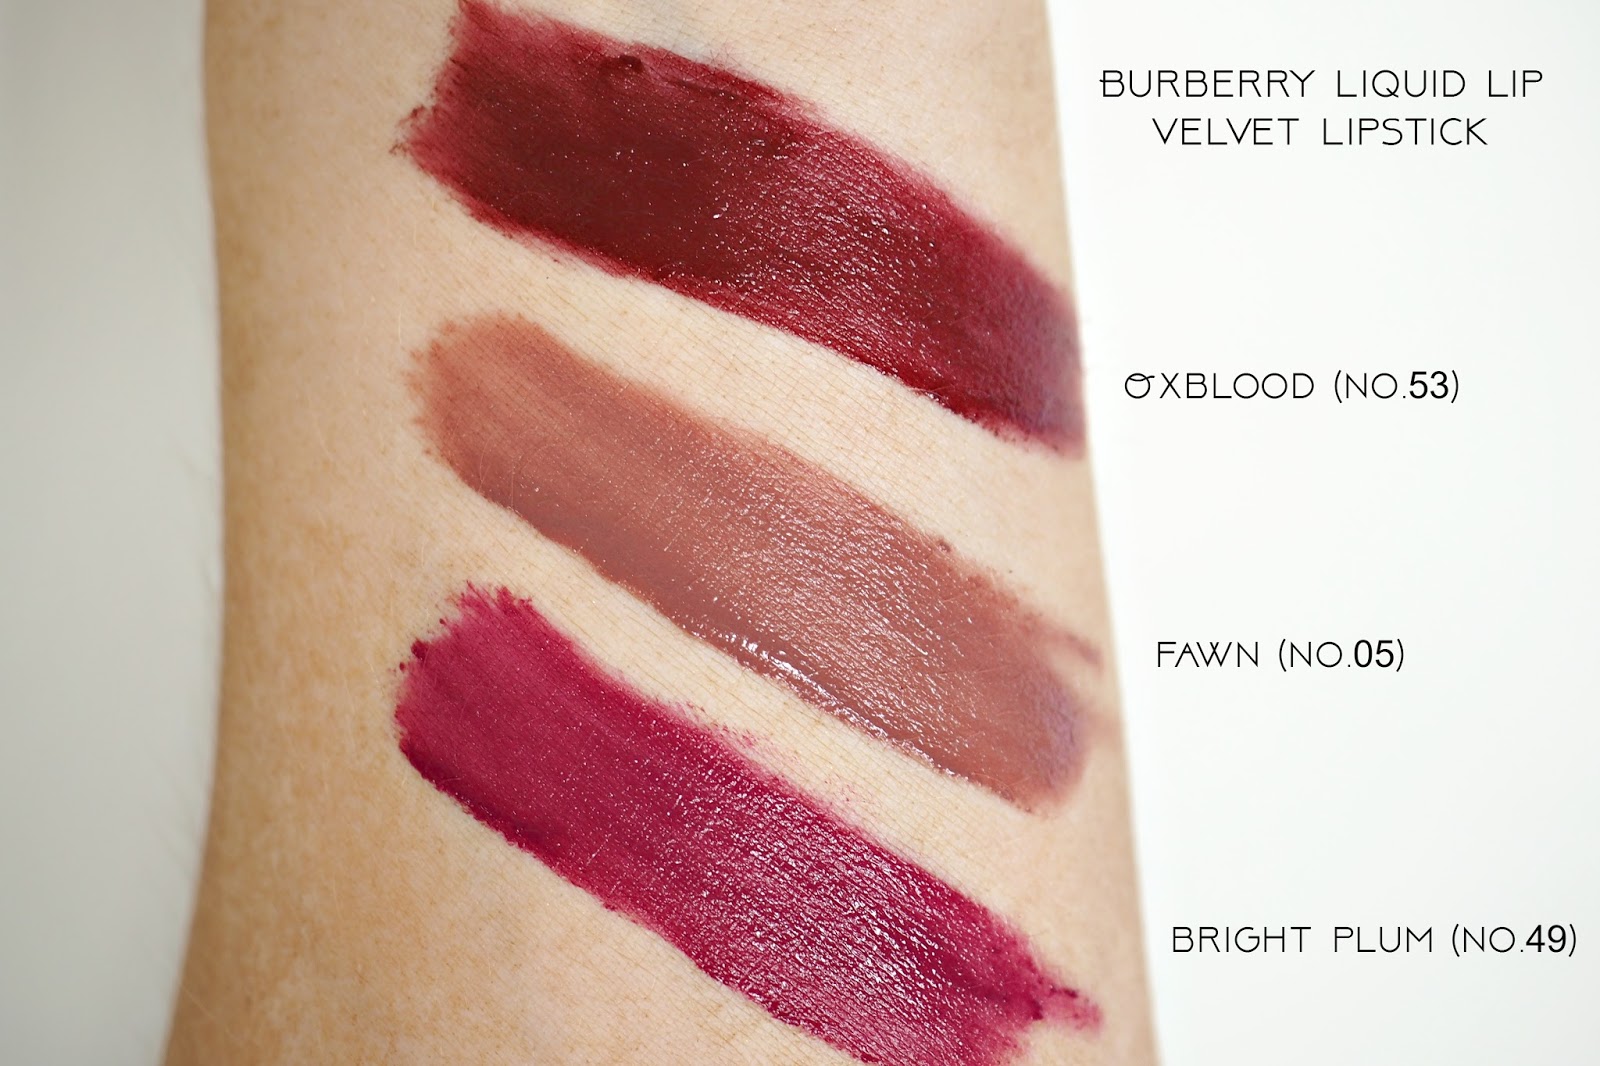 Burberry Liquid Lip Velvet Lipsticks swatches in oxblood, fawn and bright plum